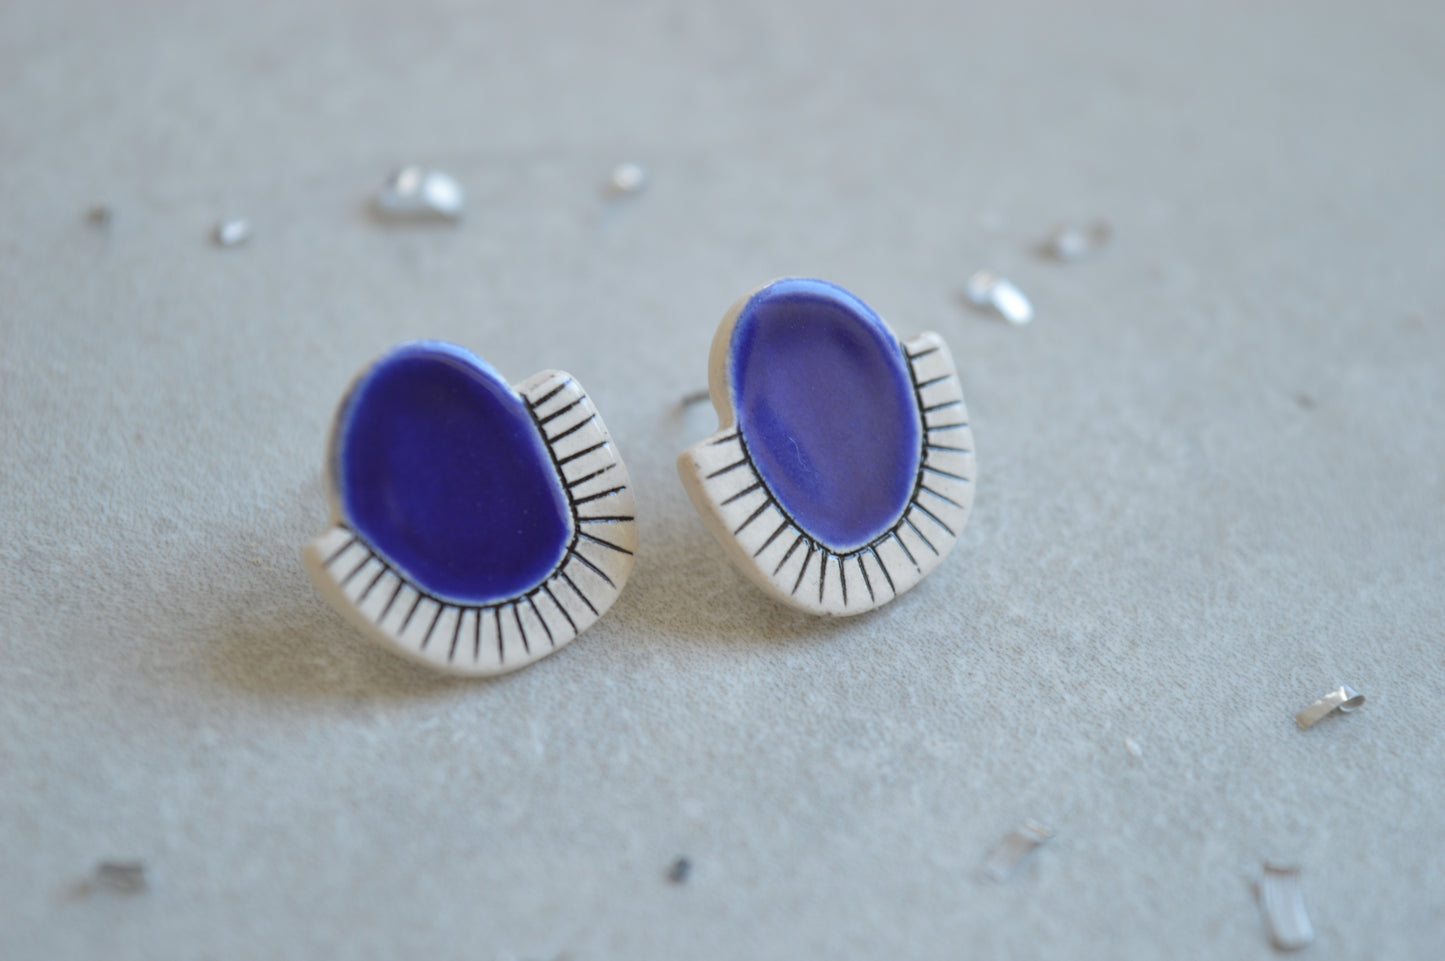 Royal blue ceramic stud earrings